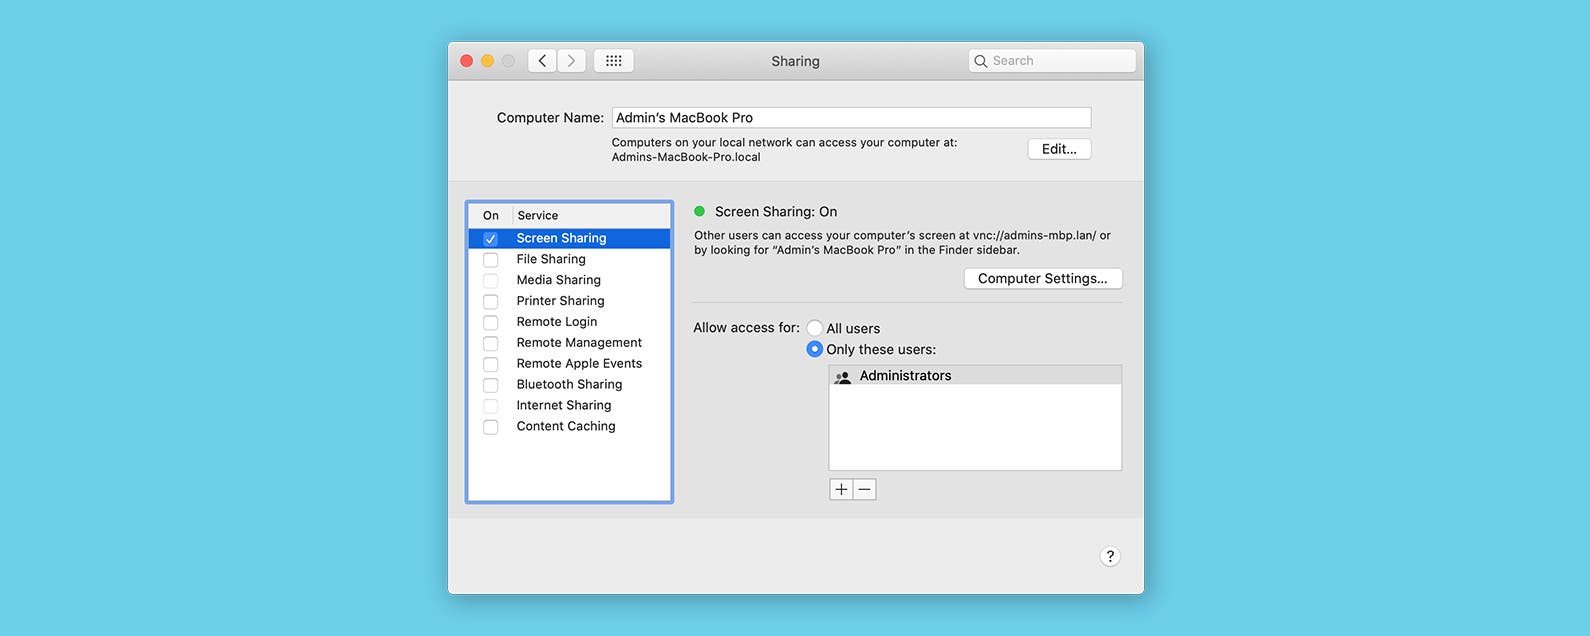 mac desktop app for iphone calls